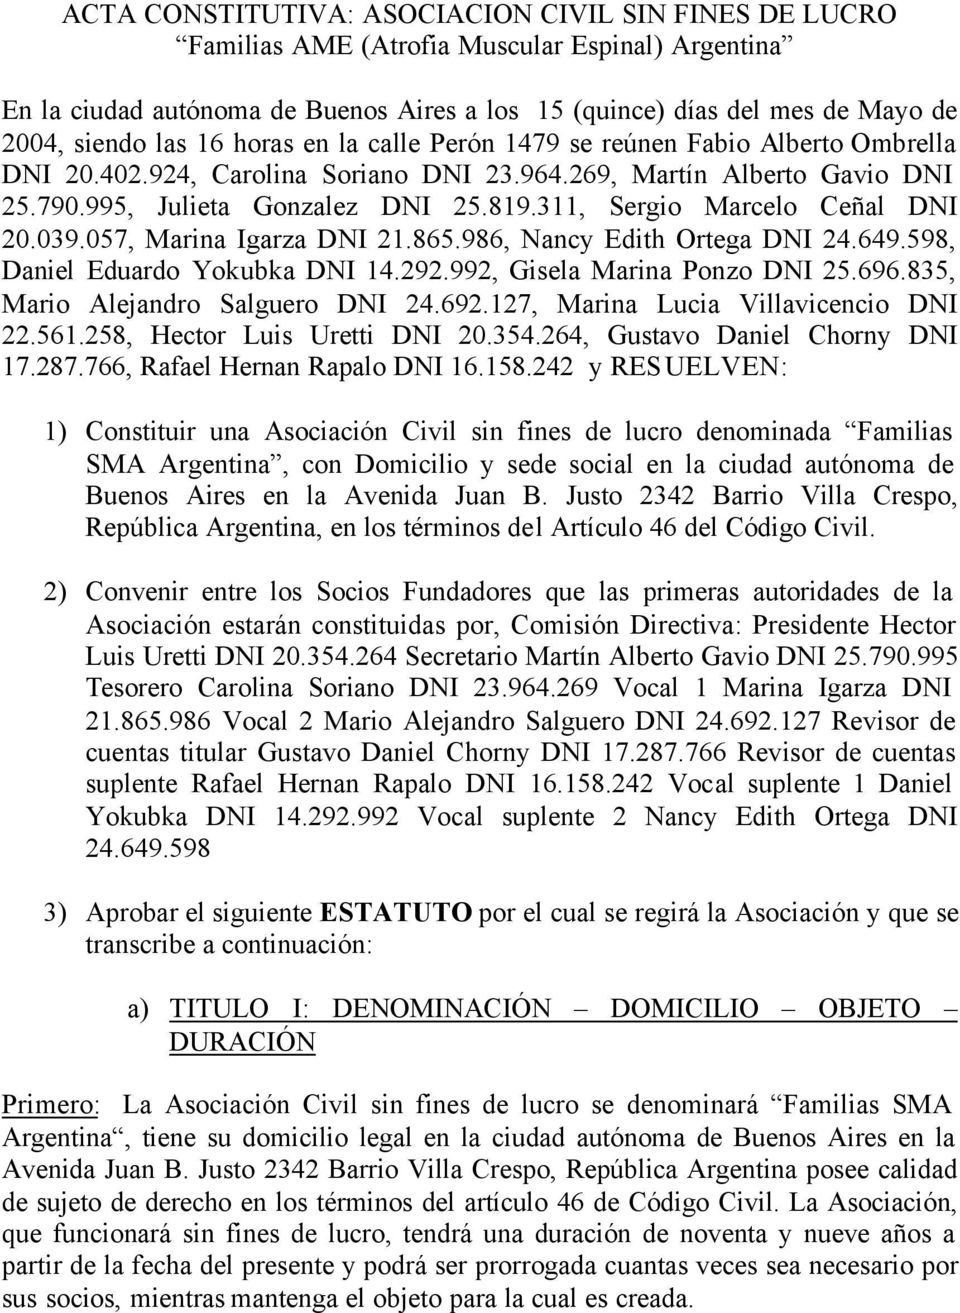 ACTA CONSTITUTIVA: ASOCIACION CIVIL SIN FINES DE LUCRO Familias AME  (Atrofia Muscular Espinal) Argentina - PDF Free Download